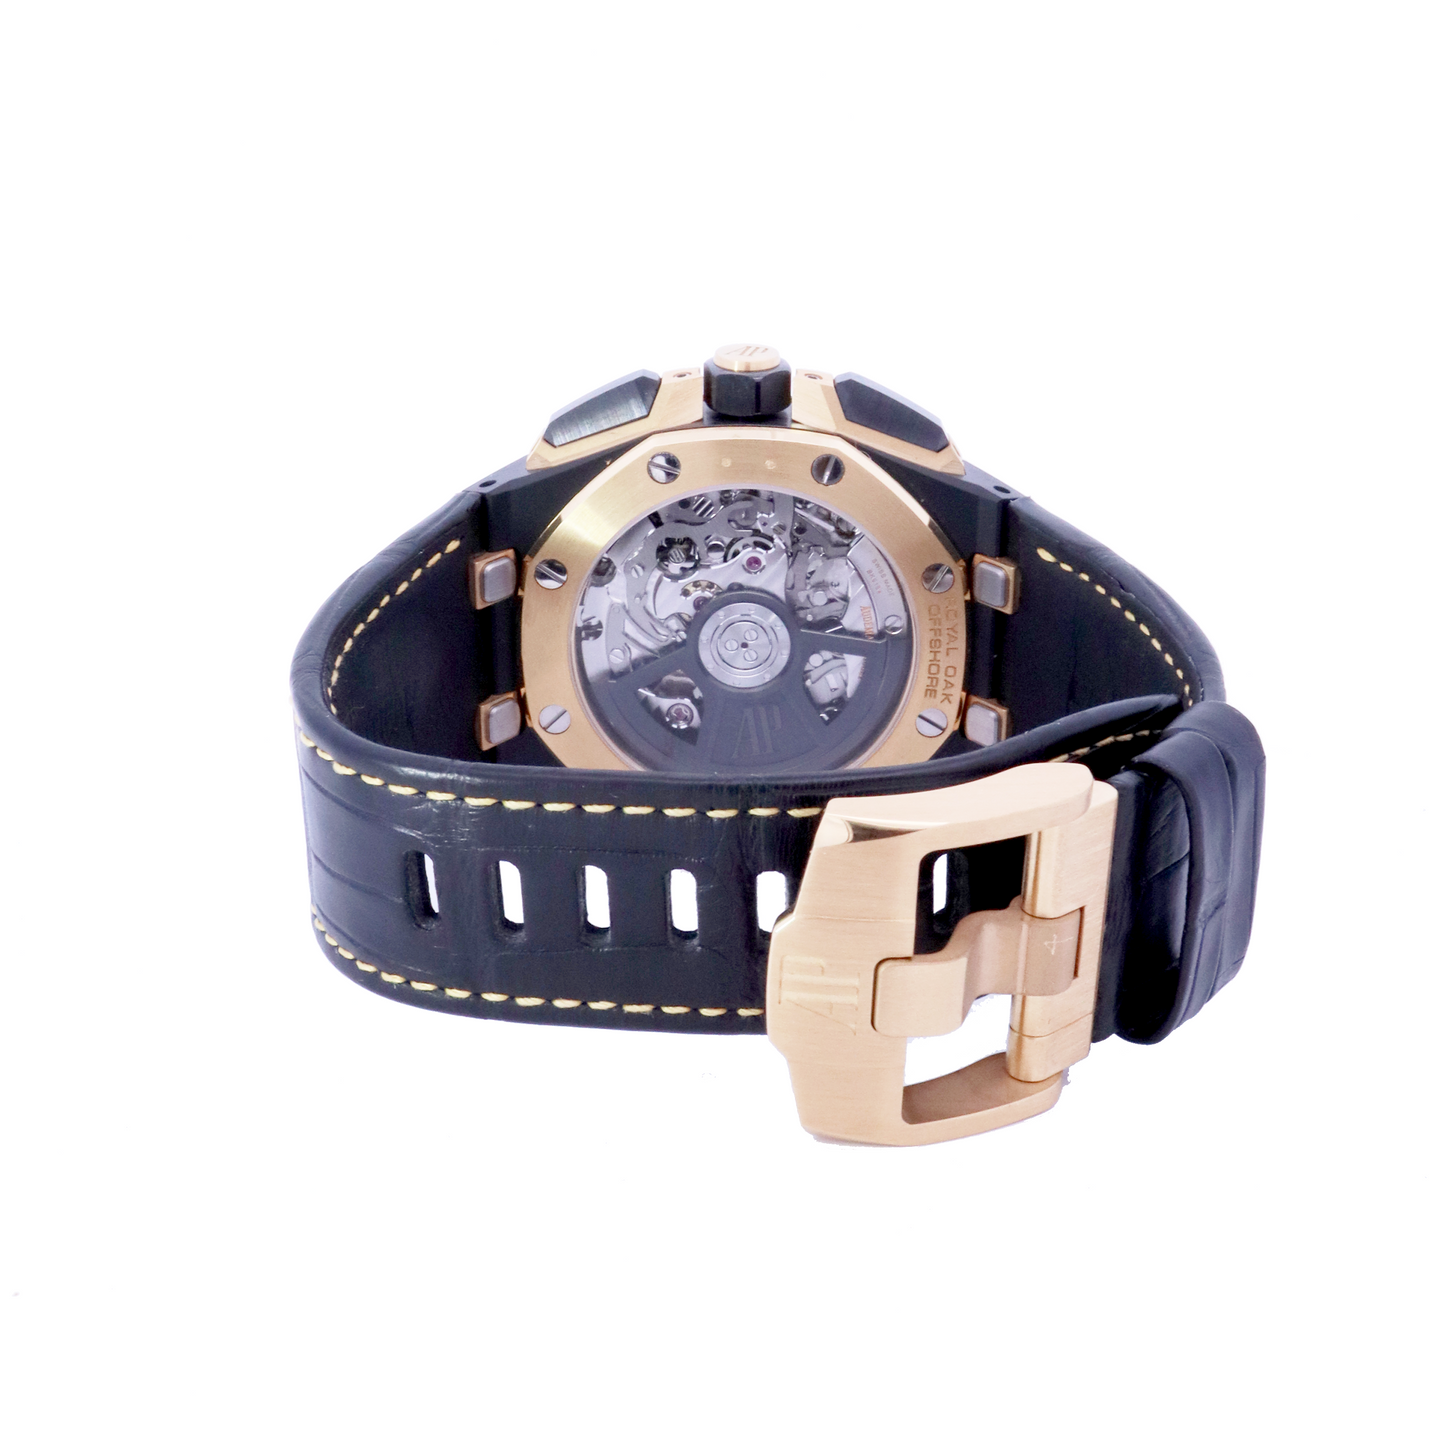 Audemars Piguet Royal Oak Offshore Black Ceramic & Yellow Gold 43mm Black Chronograph Dial Watch | Ref# 26420CE.OO.A127CR.01 - Happy Jewelers Fine Jewelry Lifetime Warranty